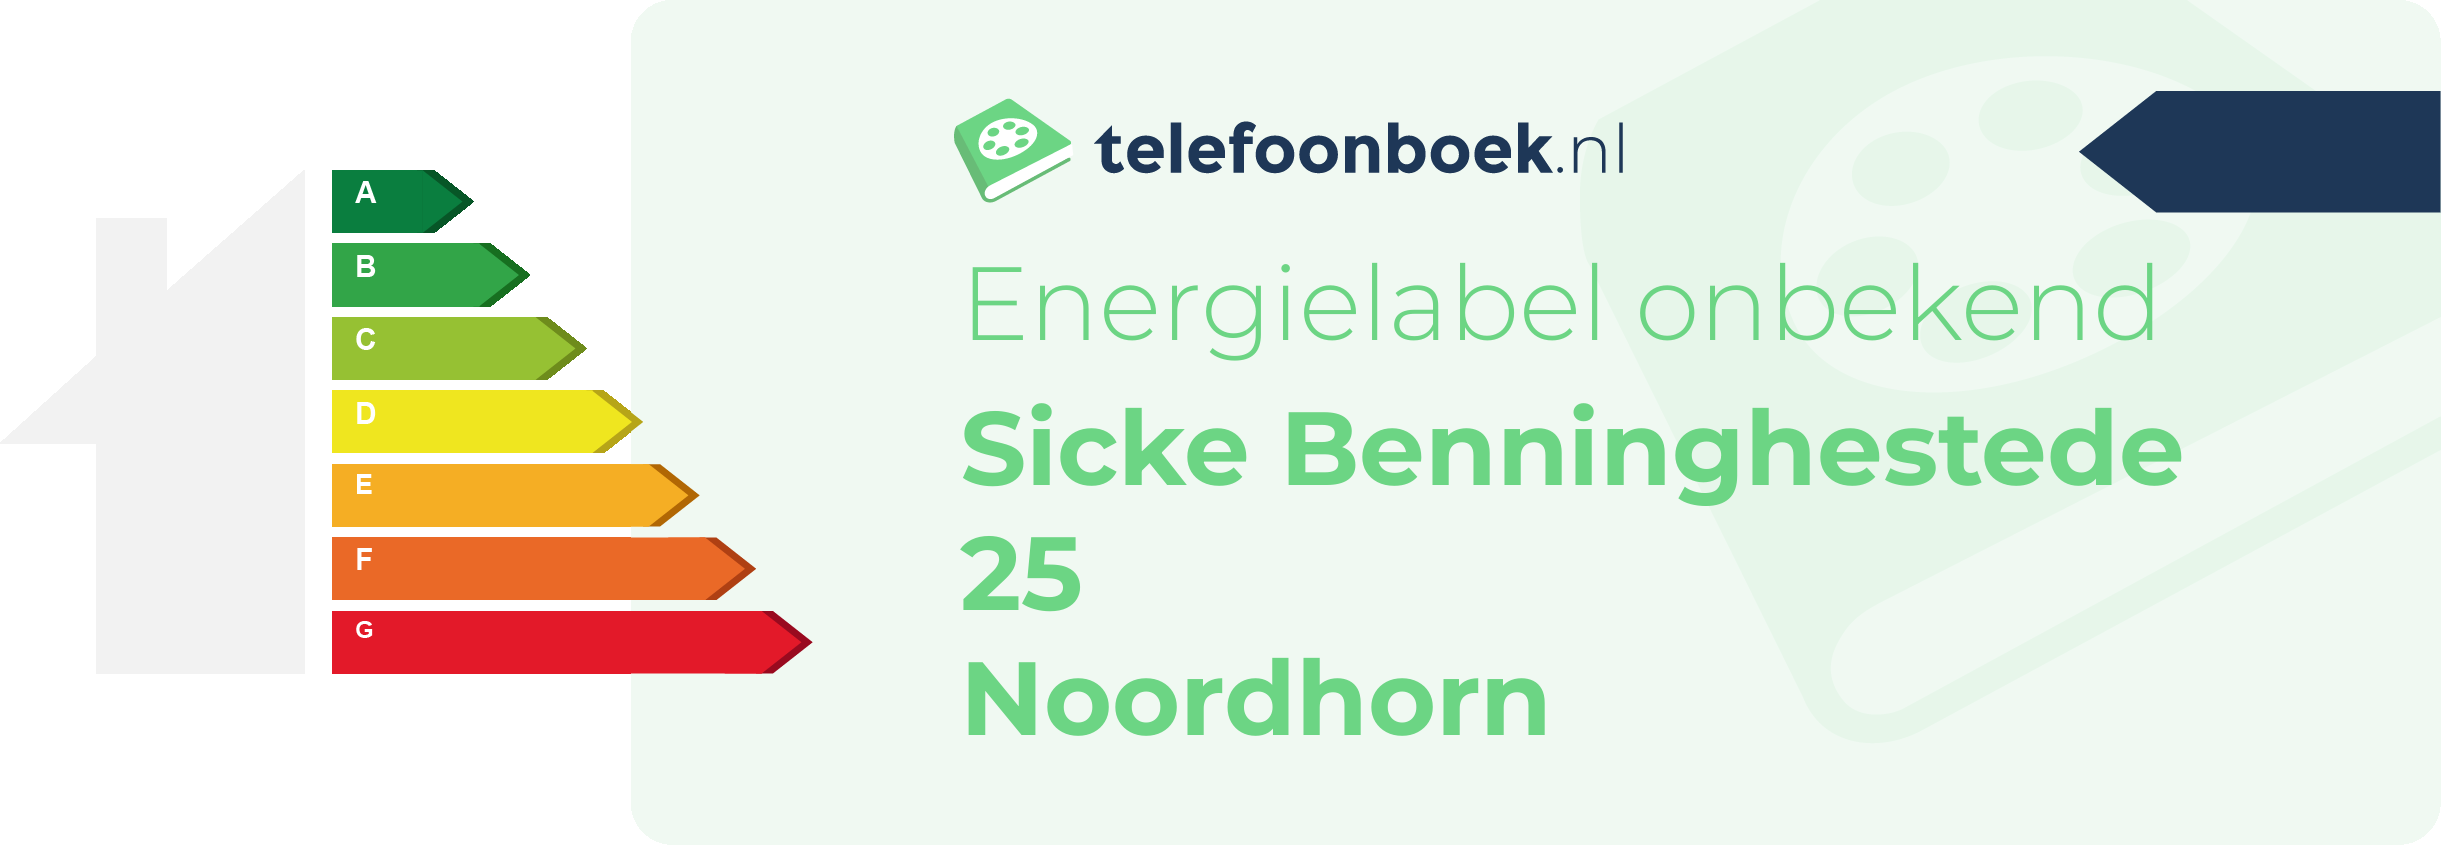 Energielabel Sicke Benninghestede 25 Noordhorn